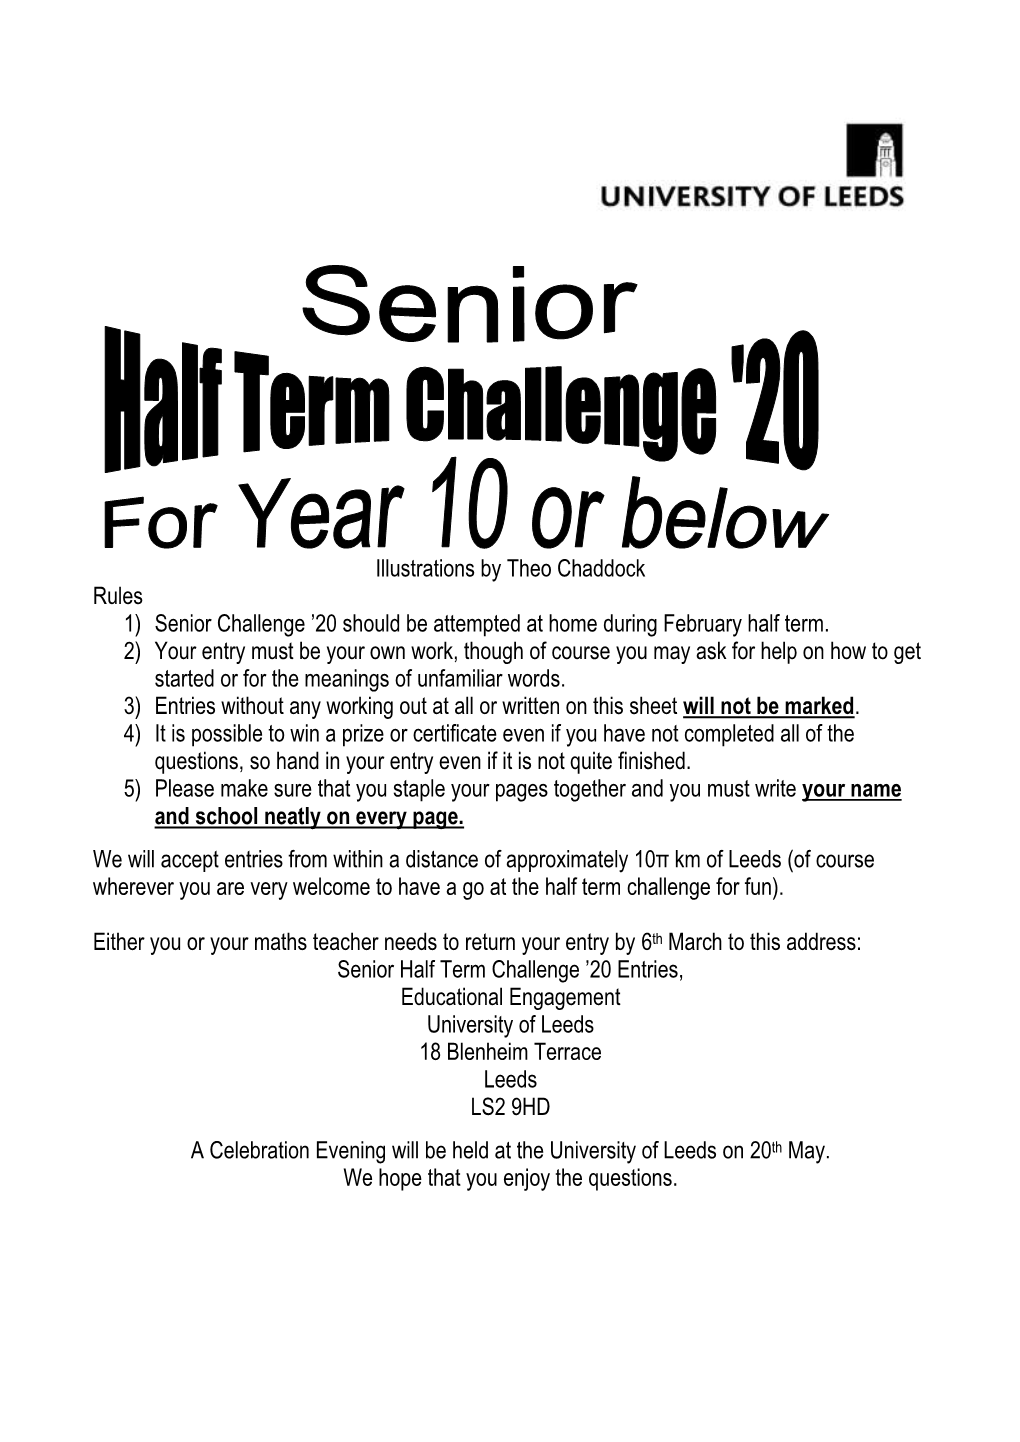 Senior Half Term Challenge ’20 Entries, Educational Engagement University of Leeds 18 Blenheim Terrace Leeds LS2 9HD